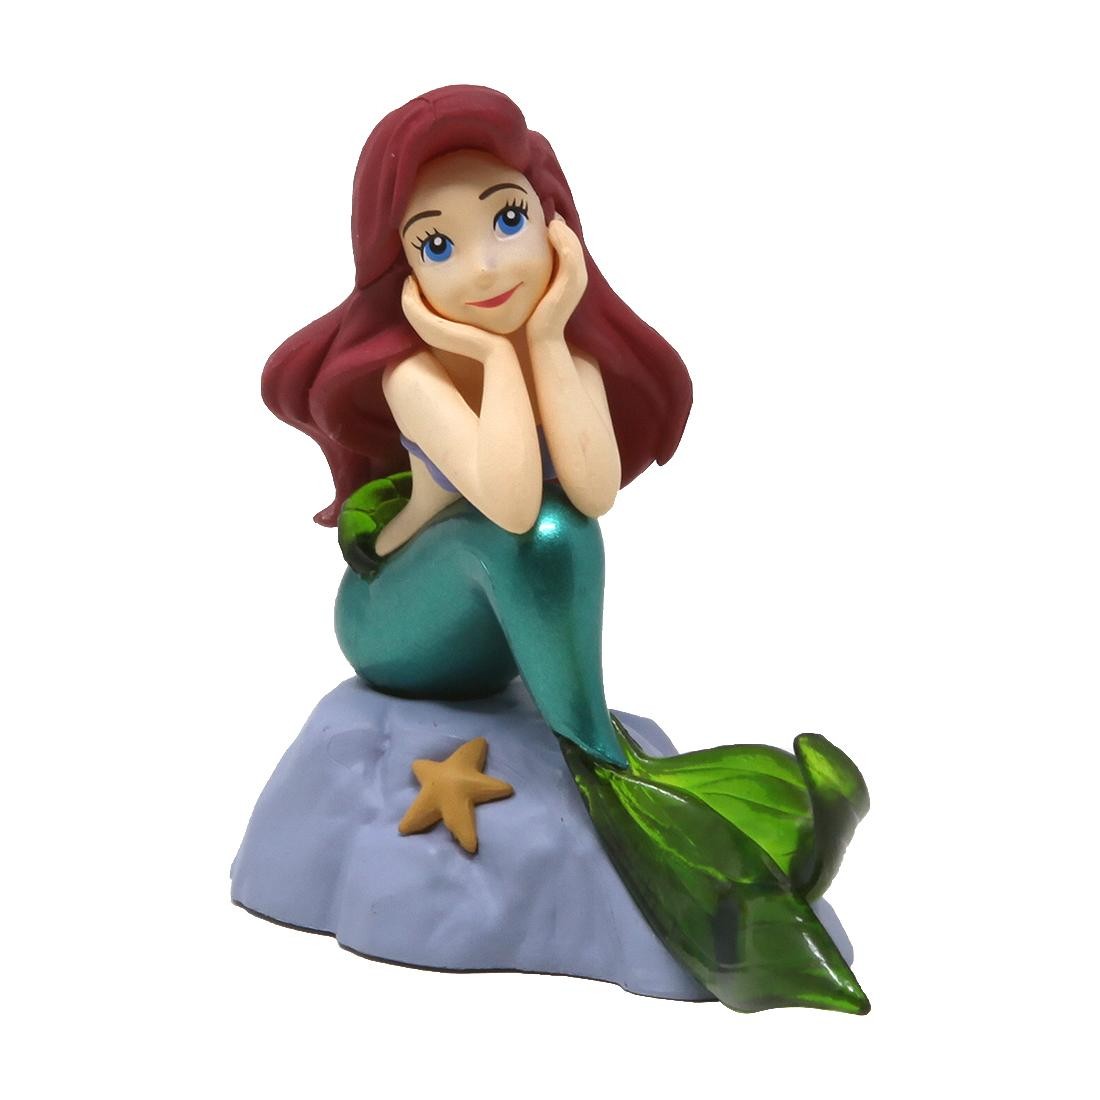 Medicom UDF Disney The Little Mermaid Ariel 